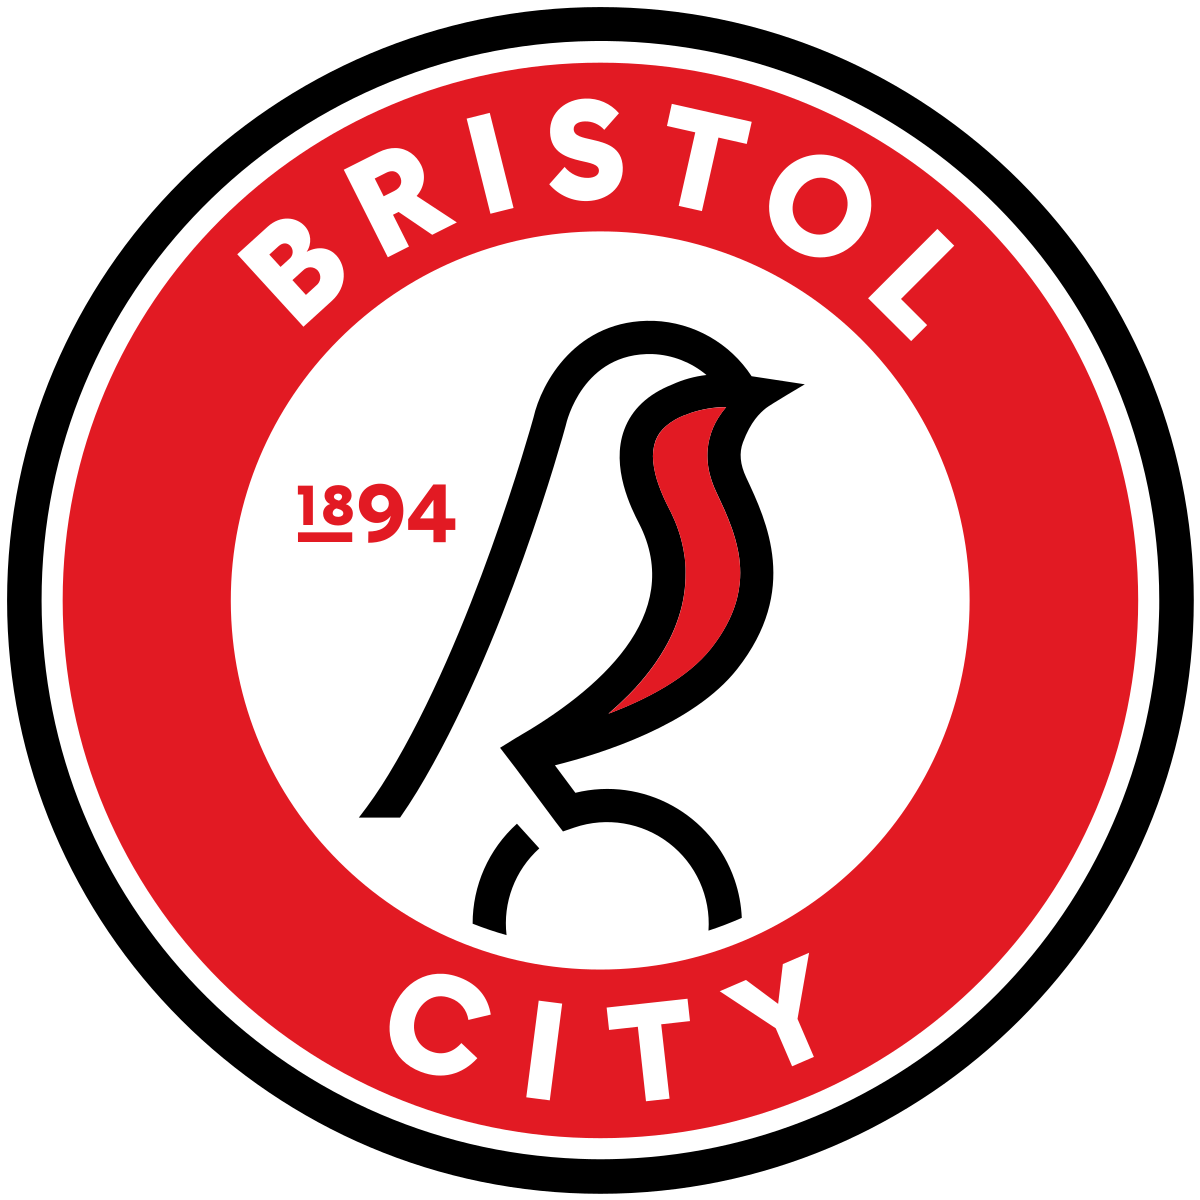 Bristol City v Hull City - Hospitality